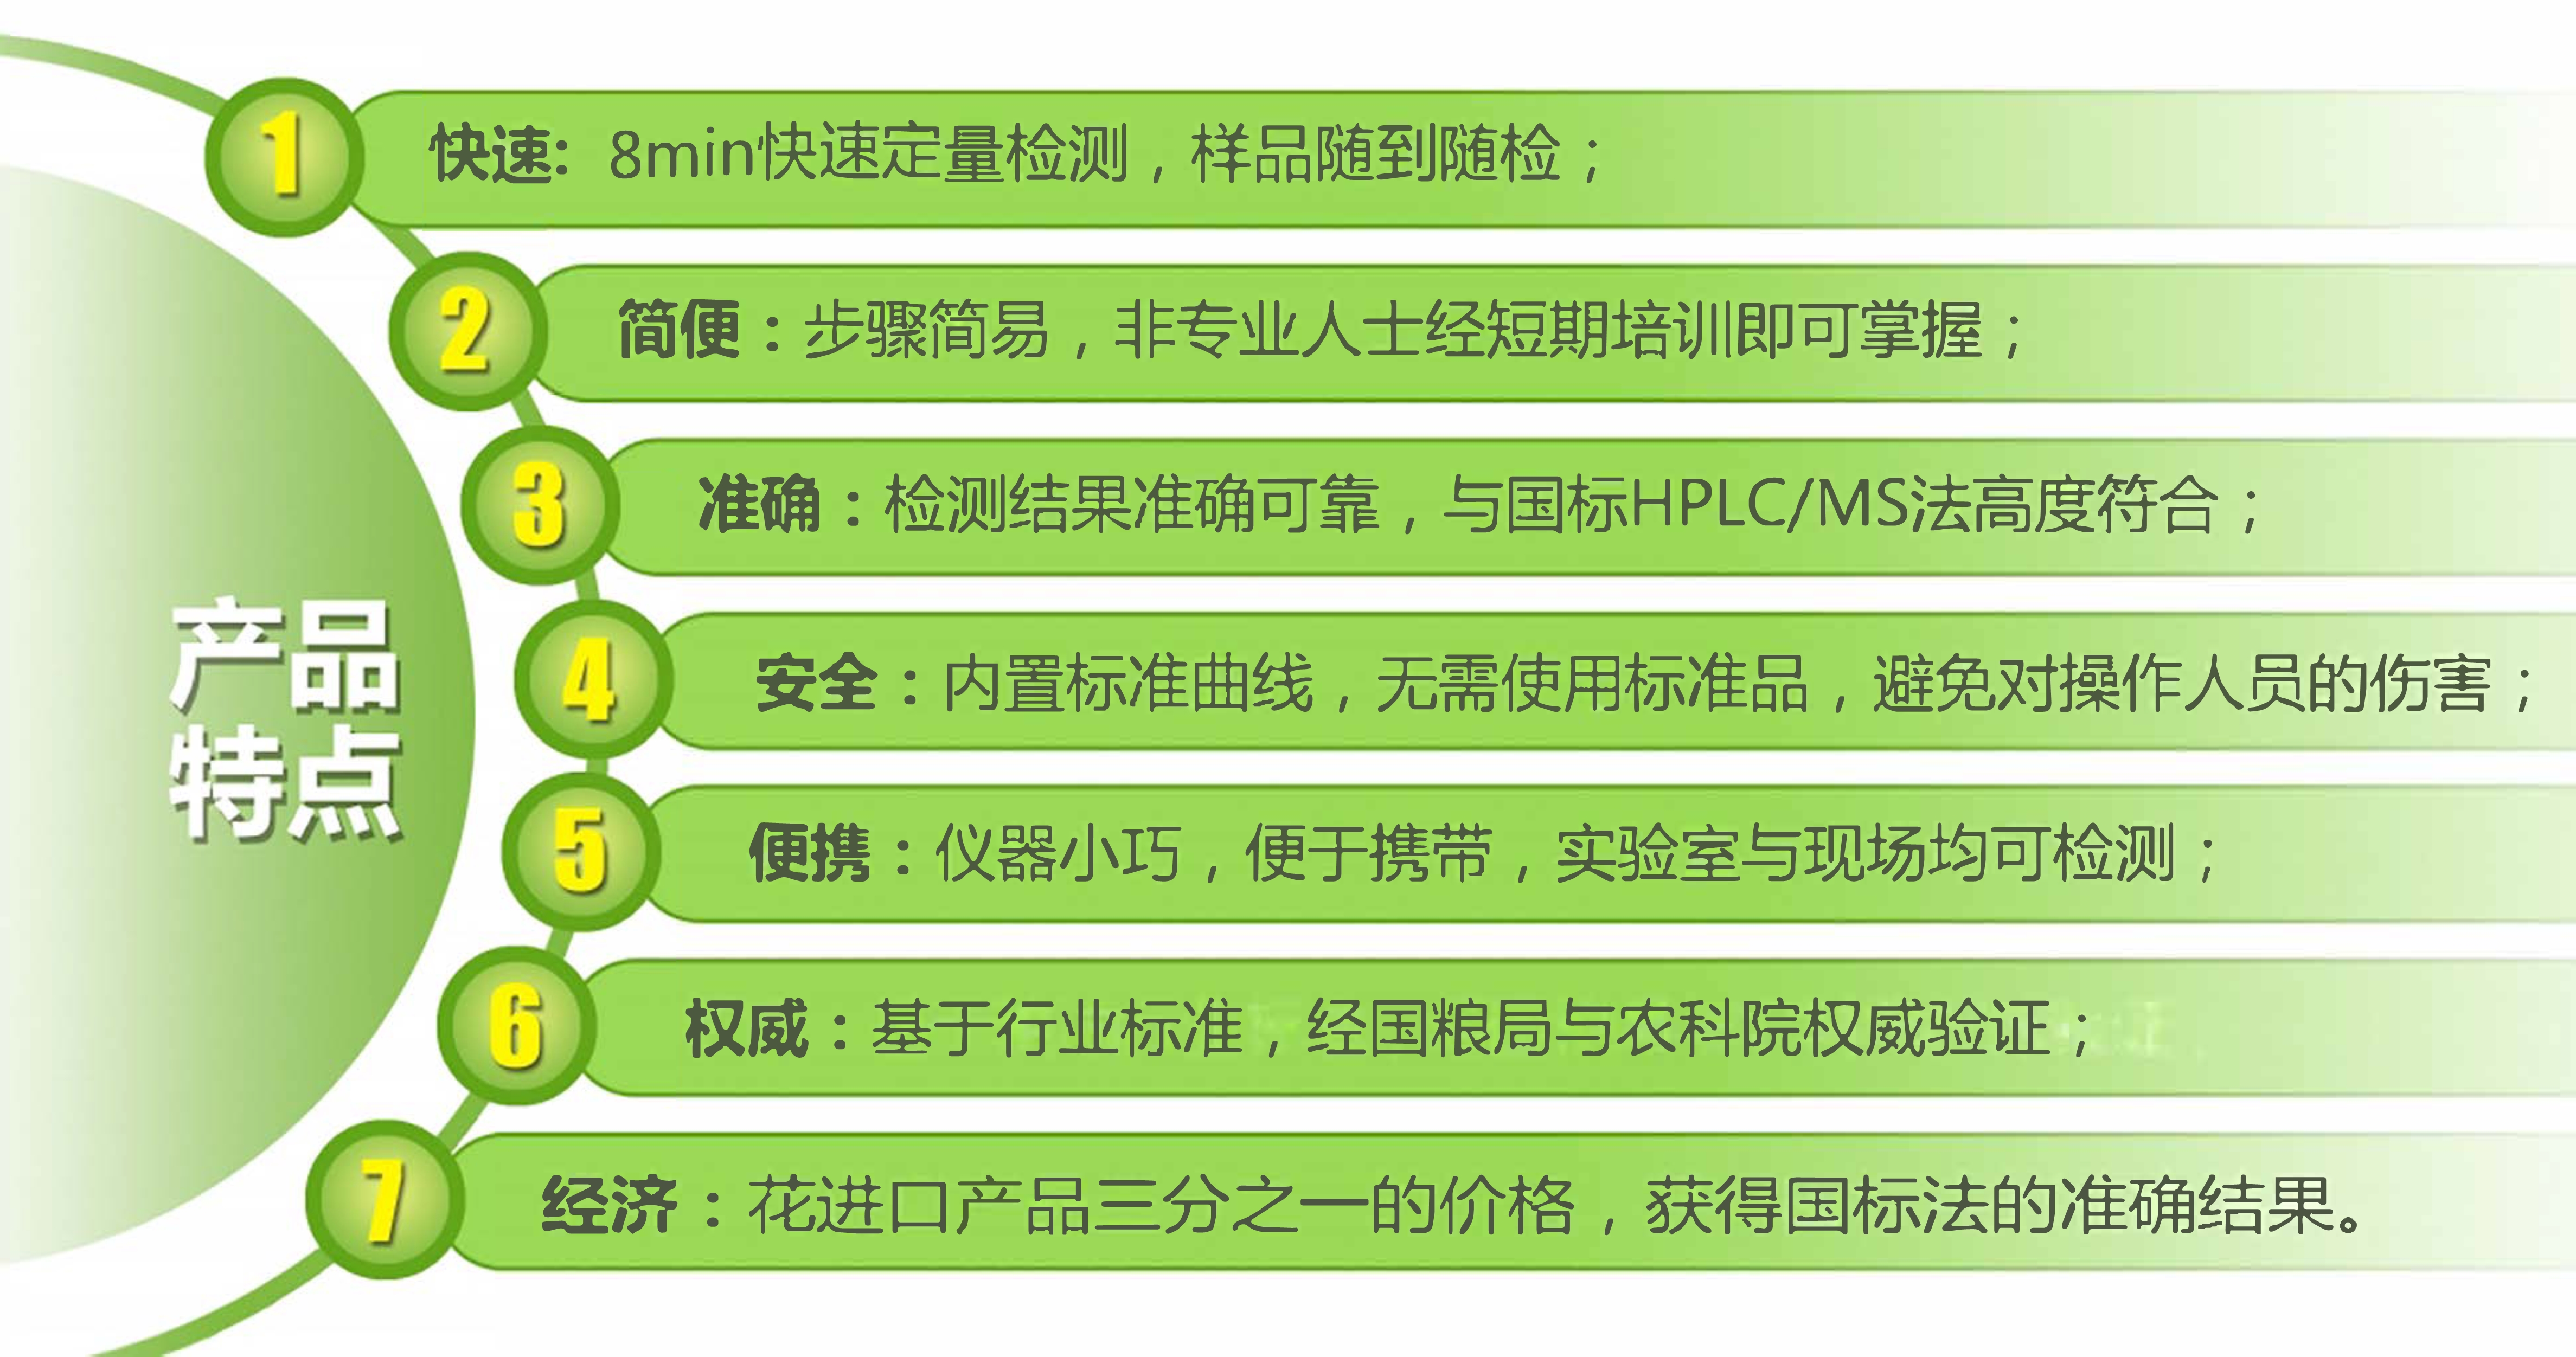 Shanghai fly test biomycotoxin series fluorescence quantitative test strip product advantages